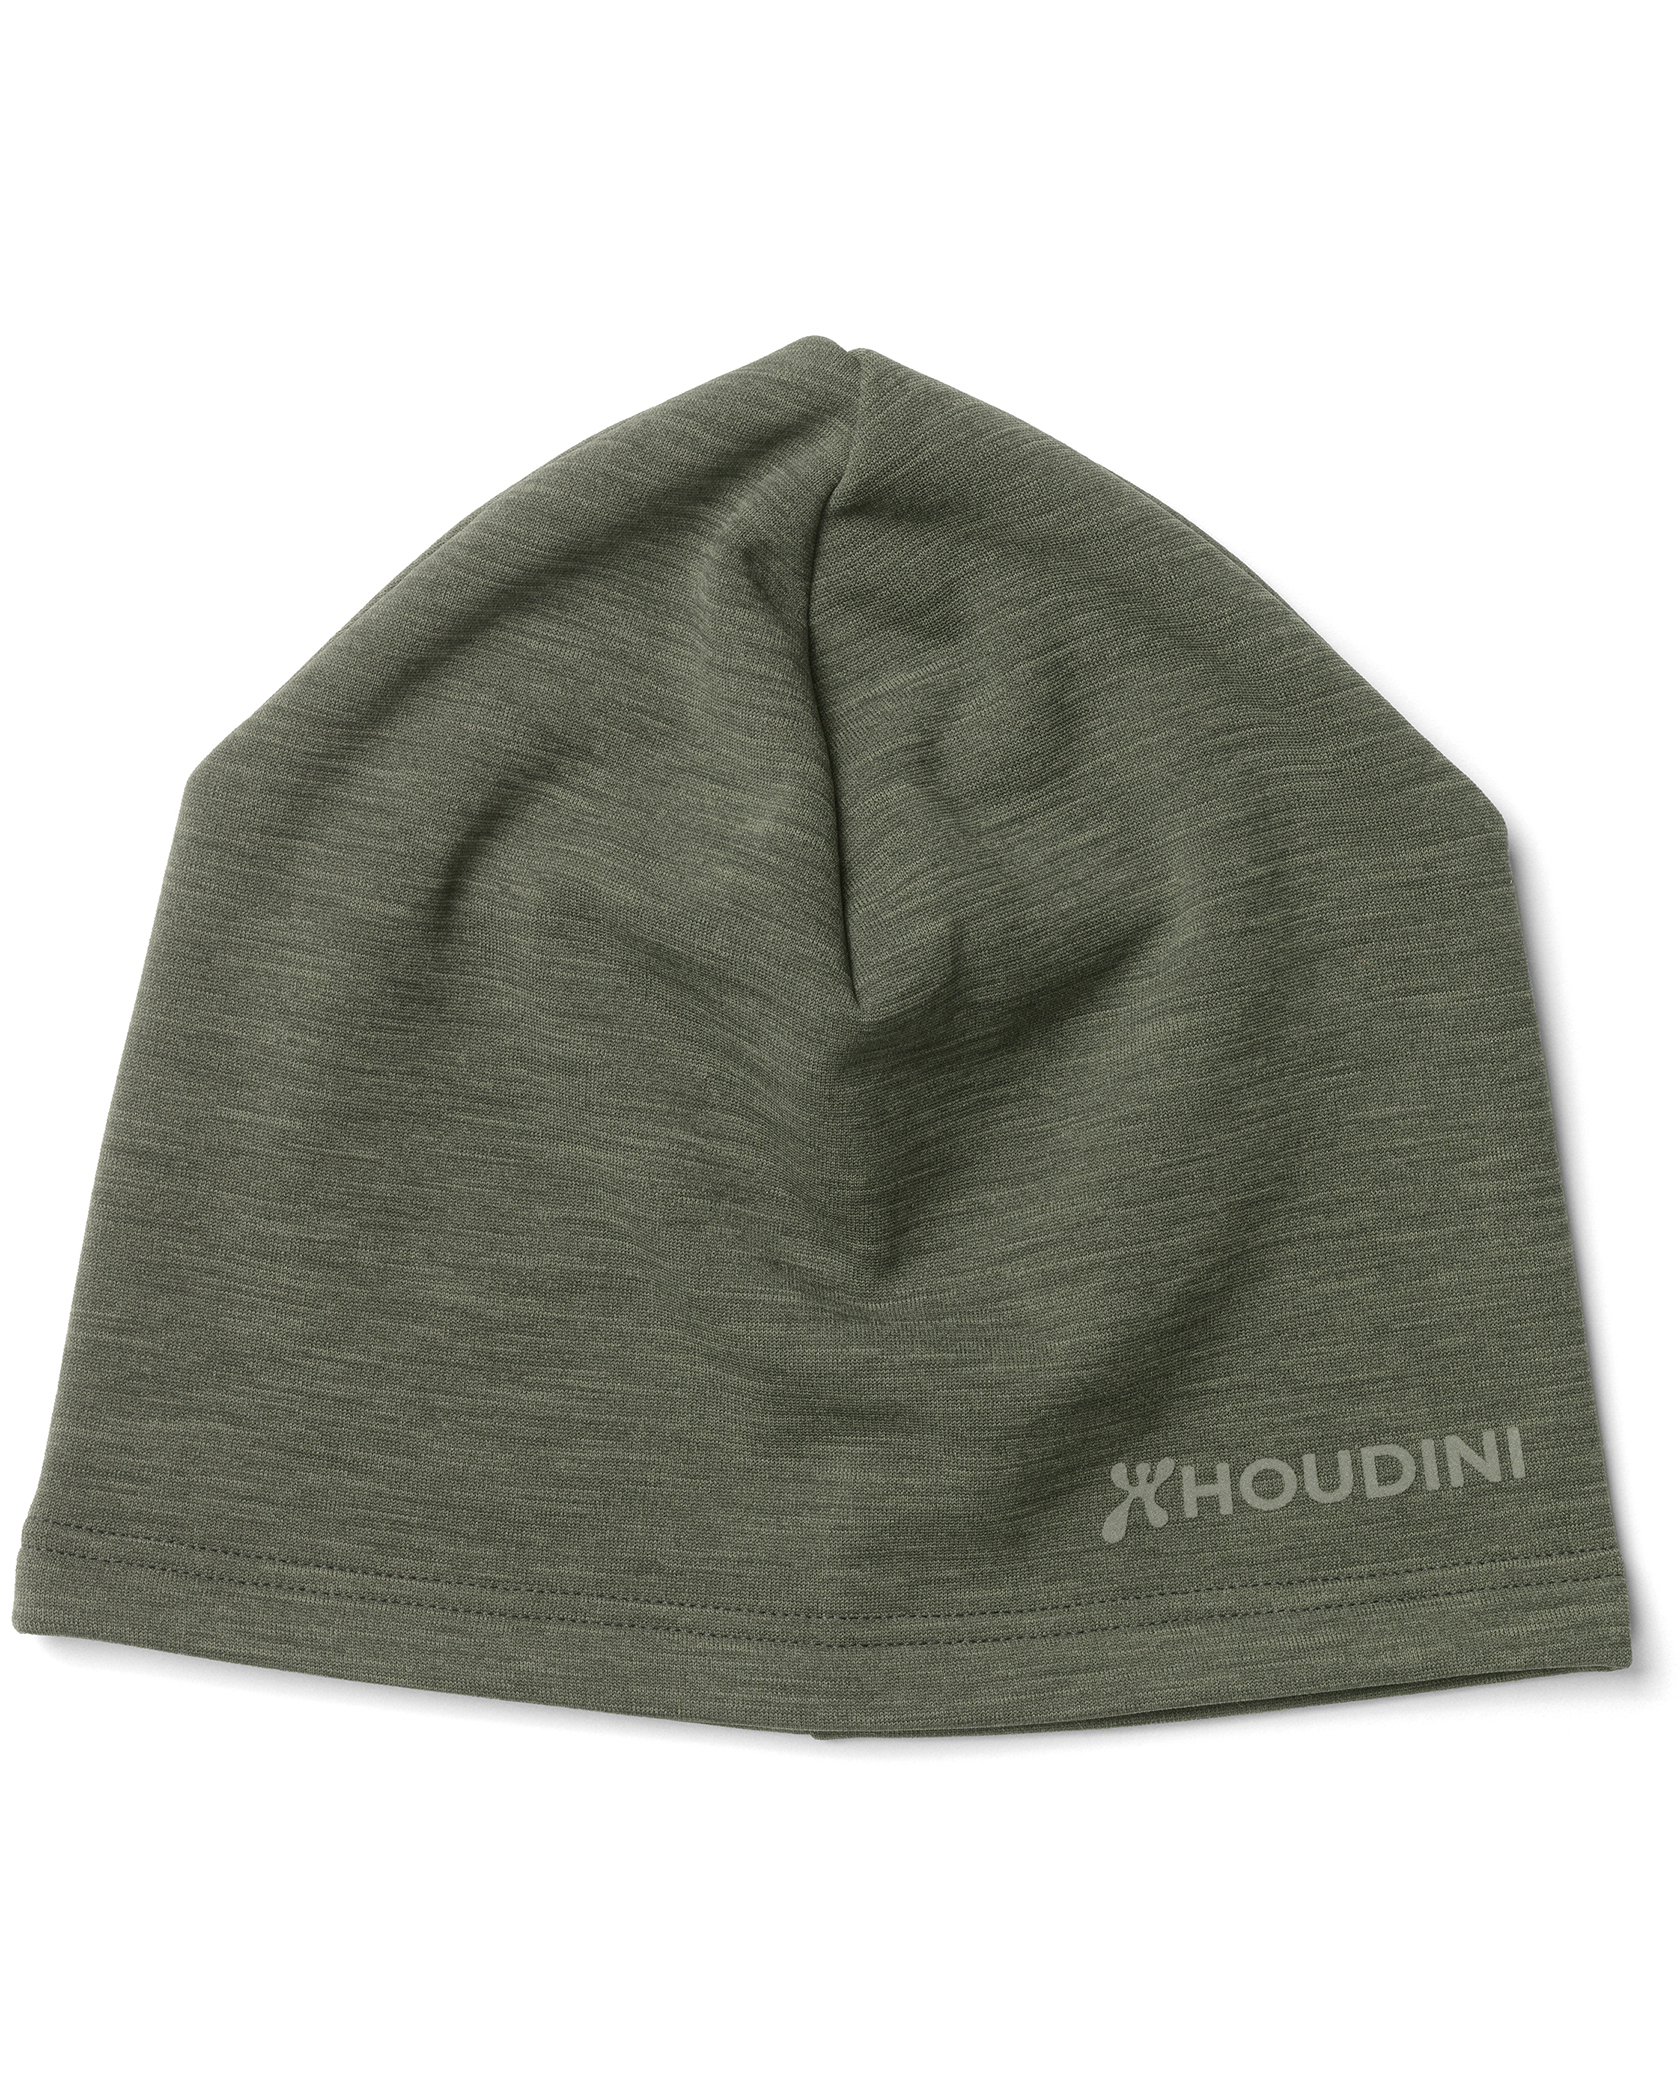 Houdini Outright Hat Light Willow Green (Storlek L)